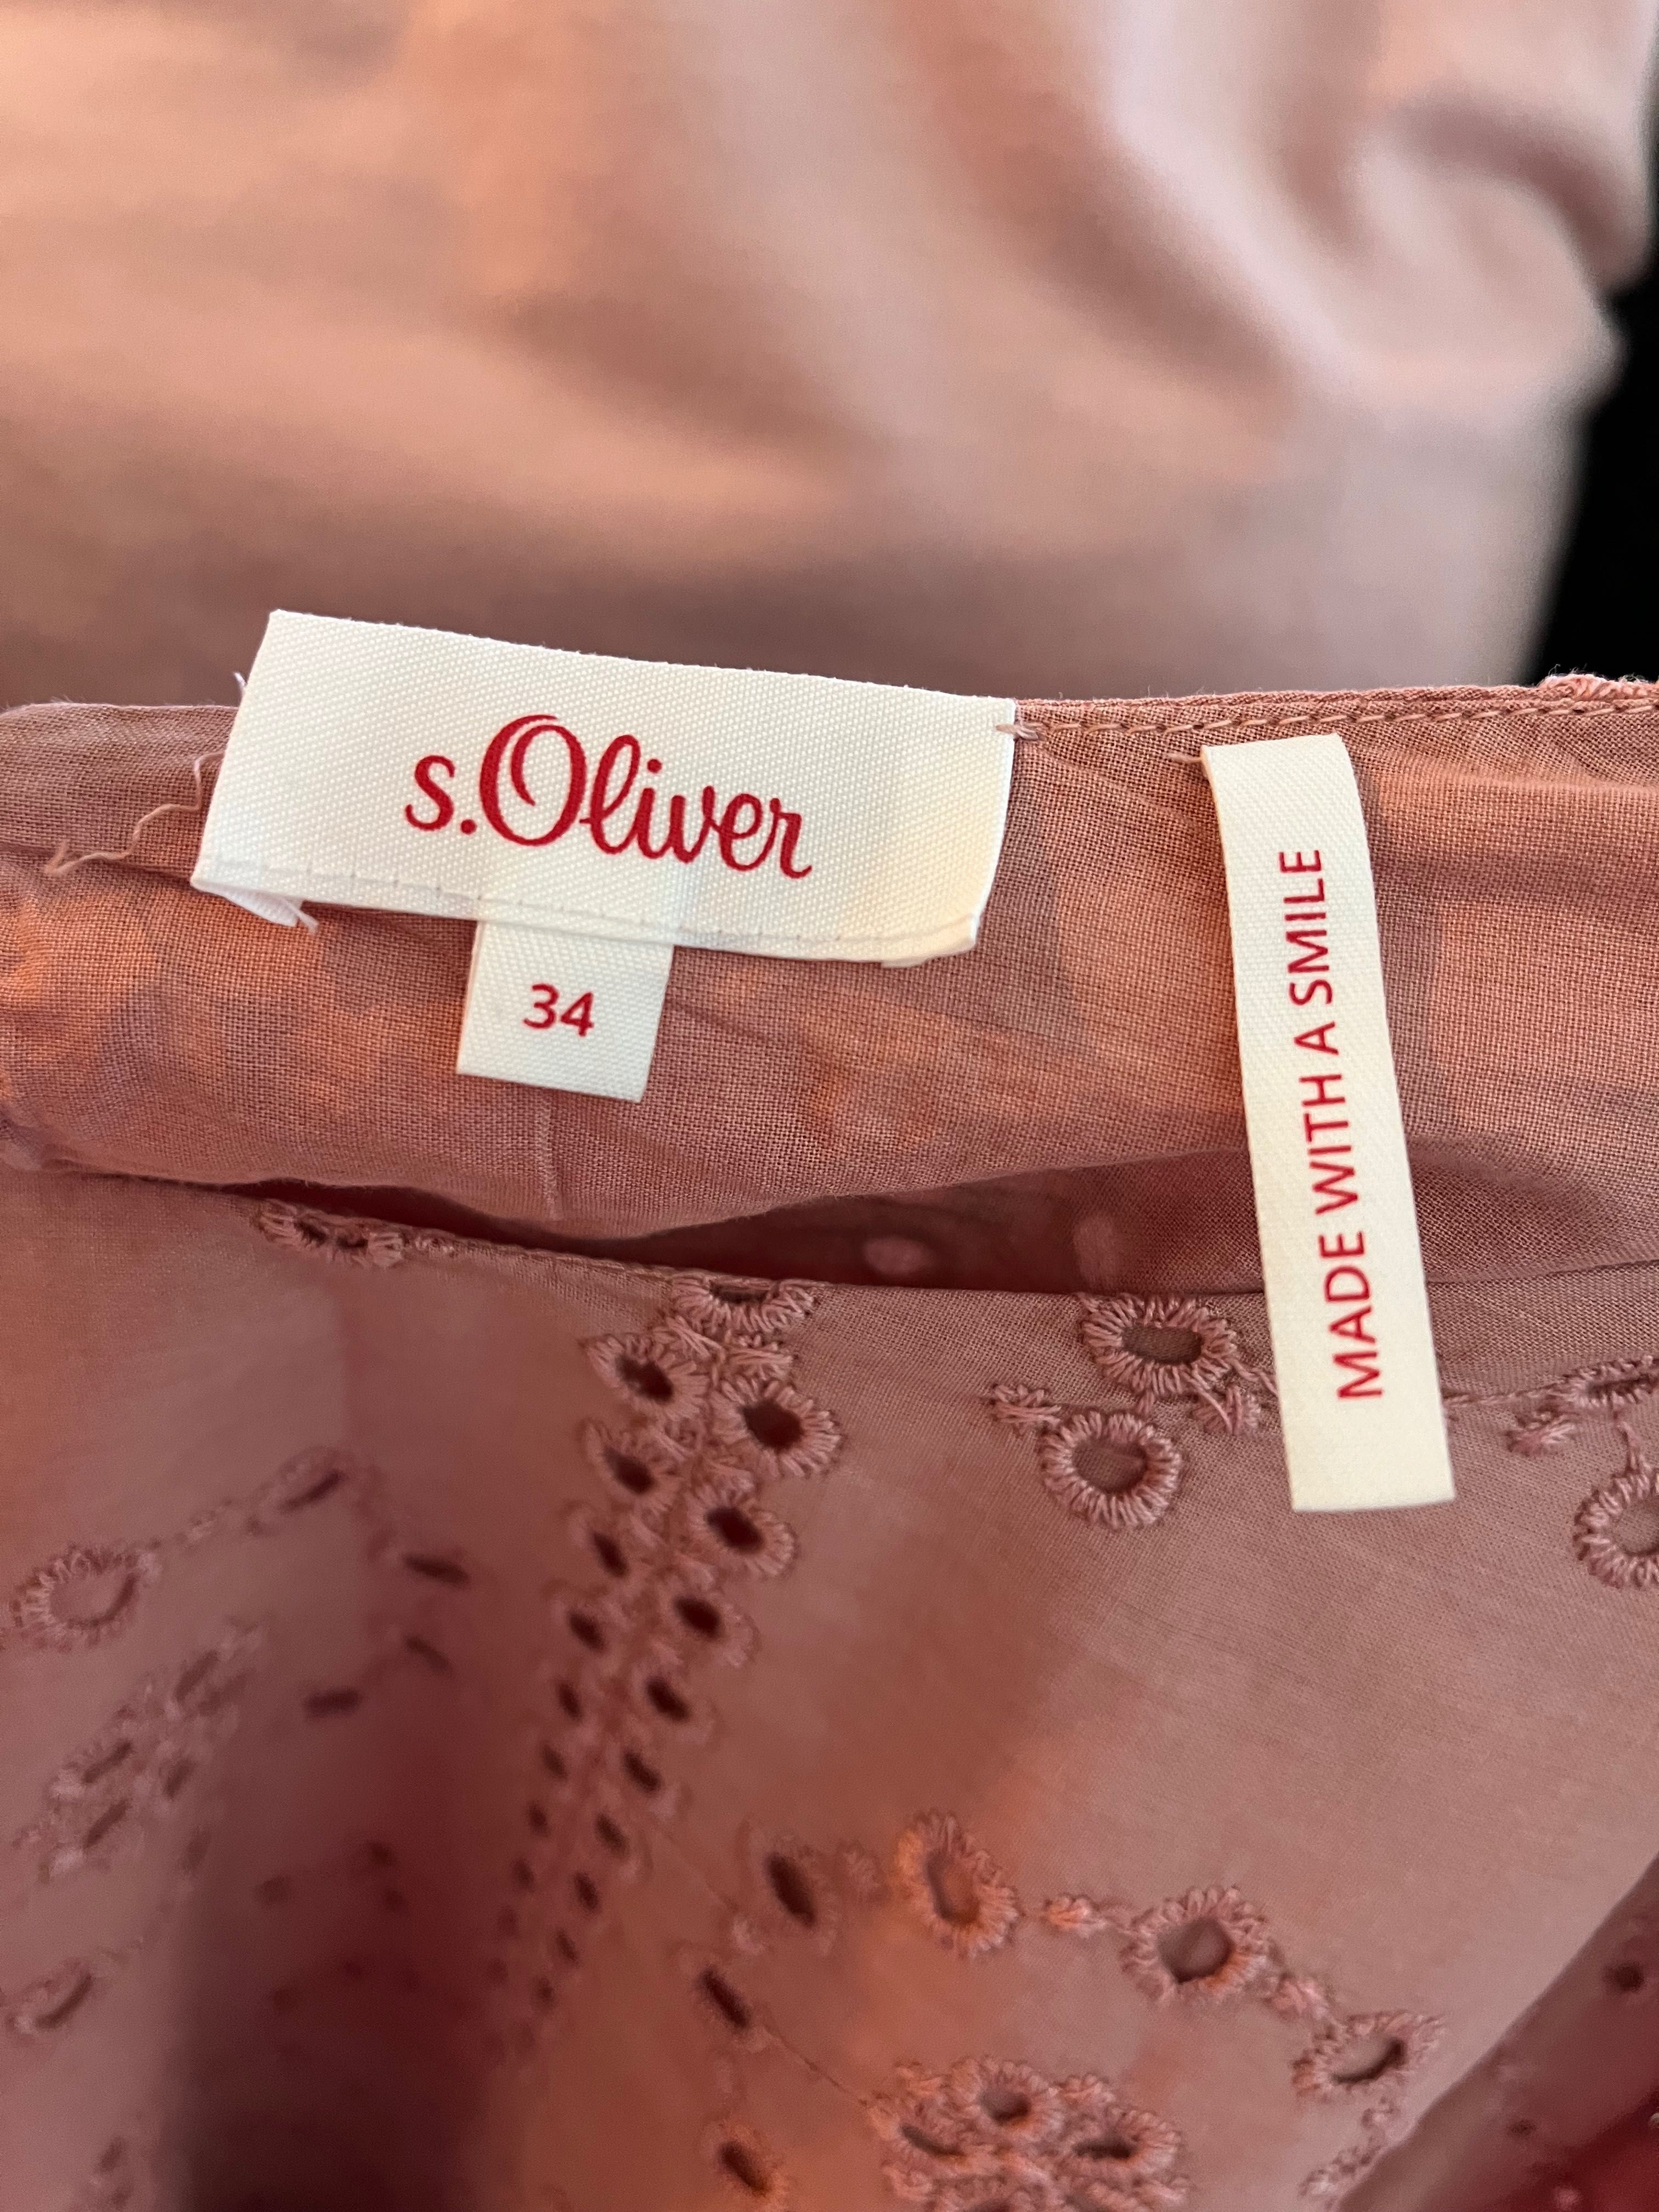 Bluza roz, S Oliver, marimea 34